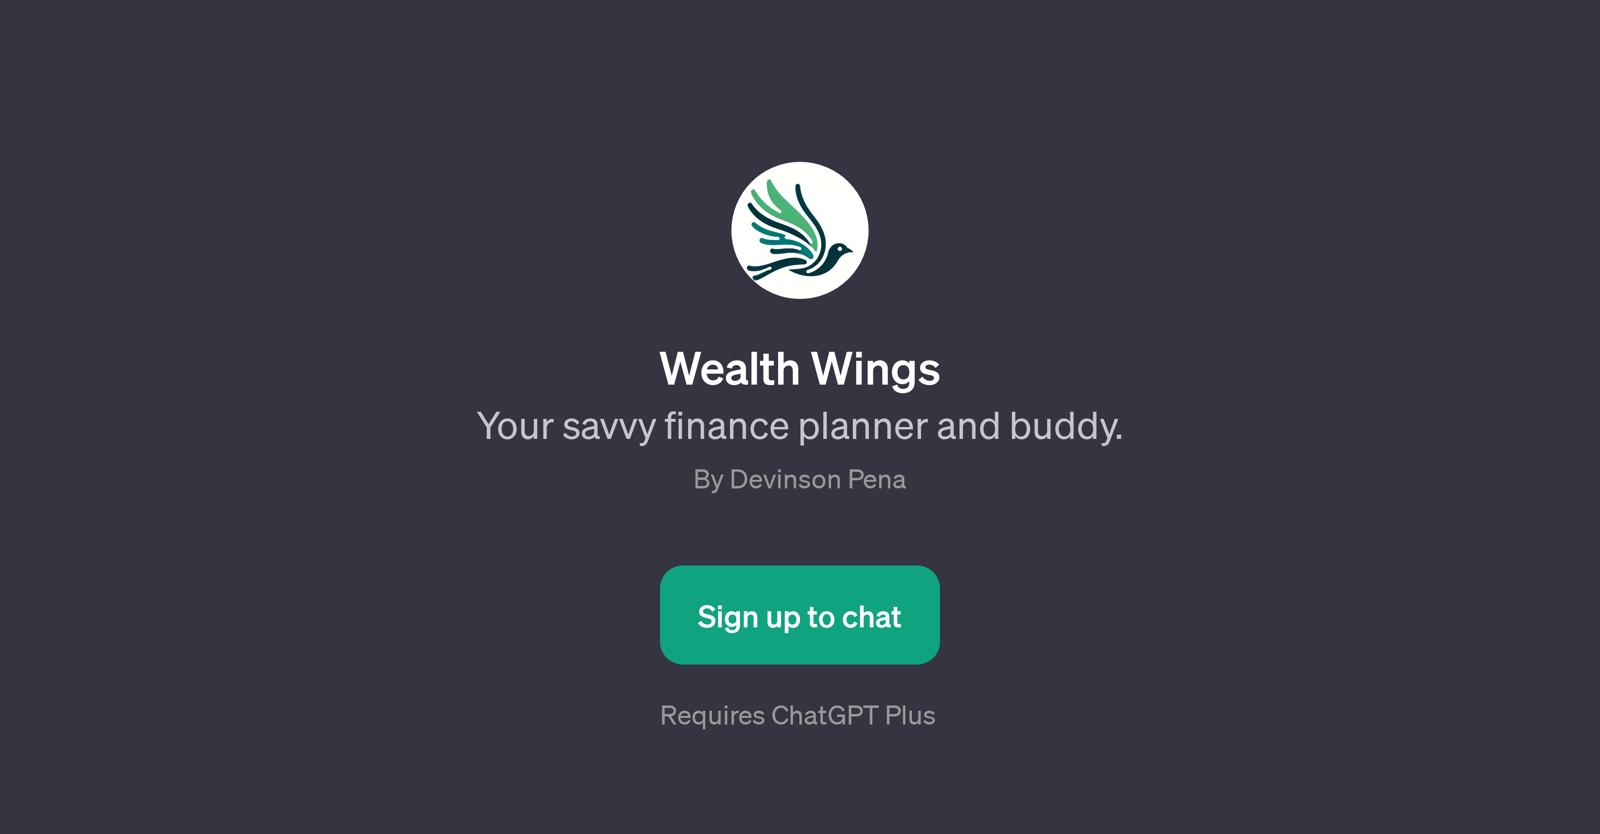 Wealth Wings website